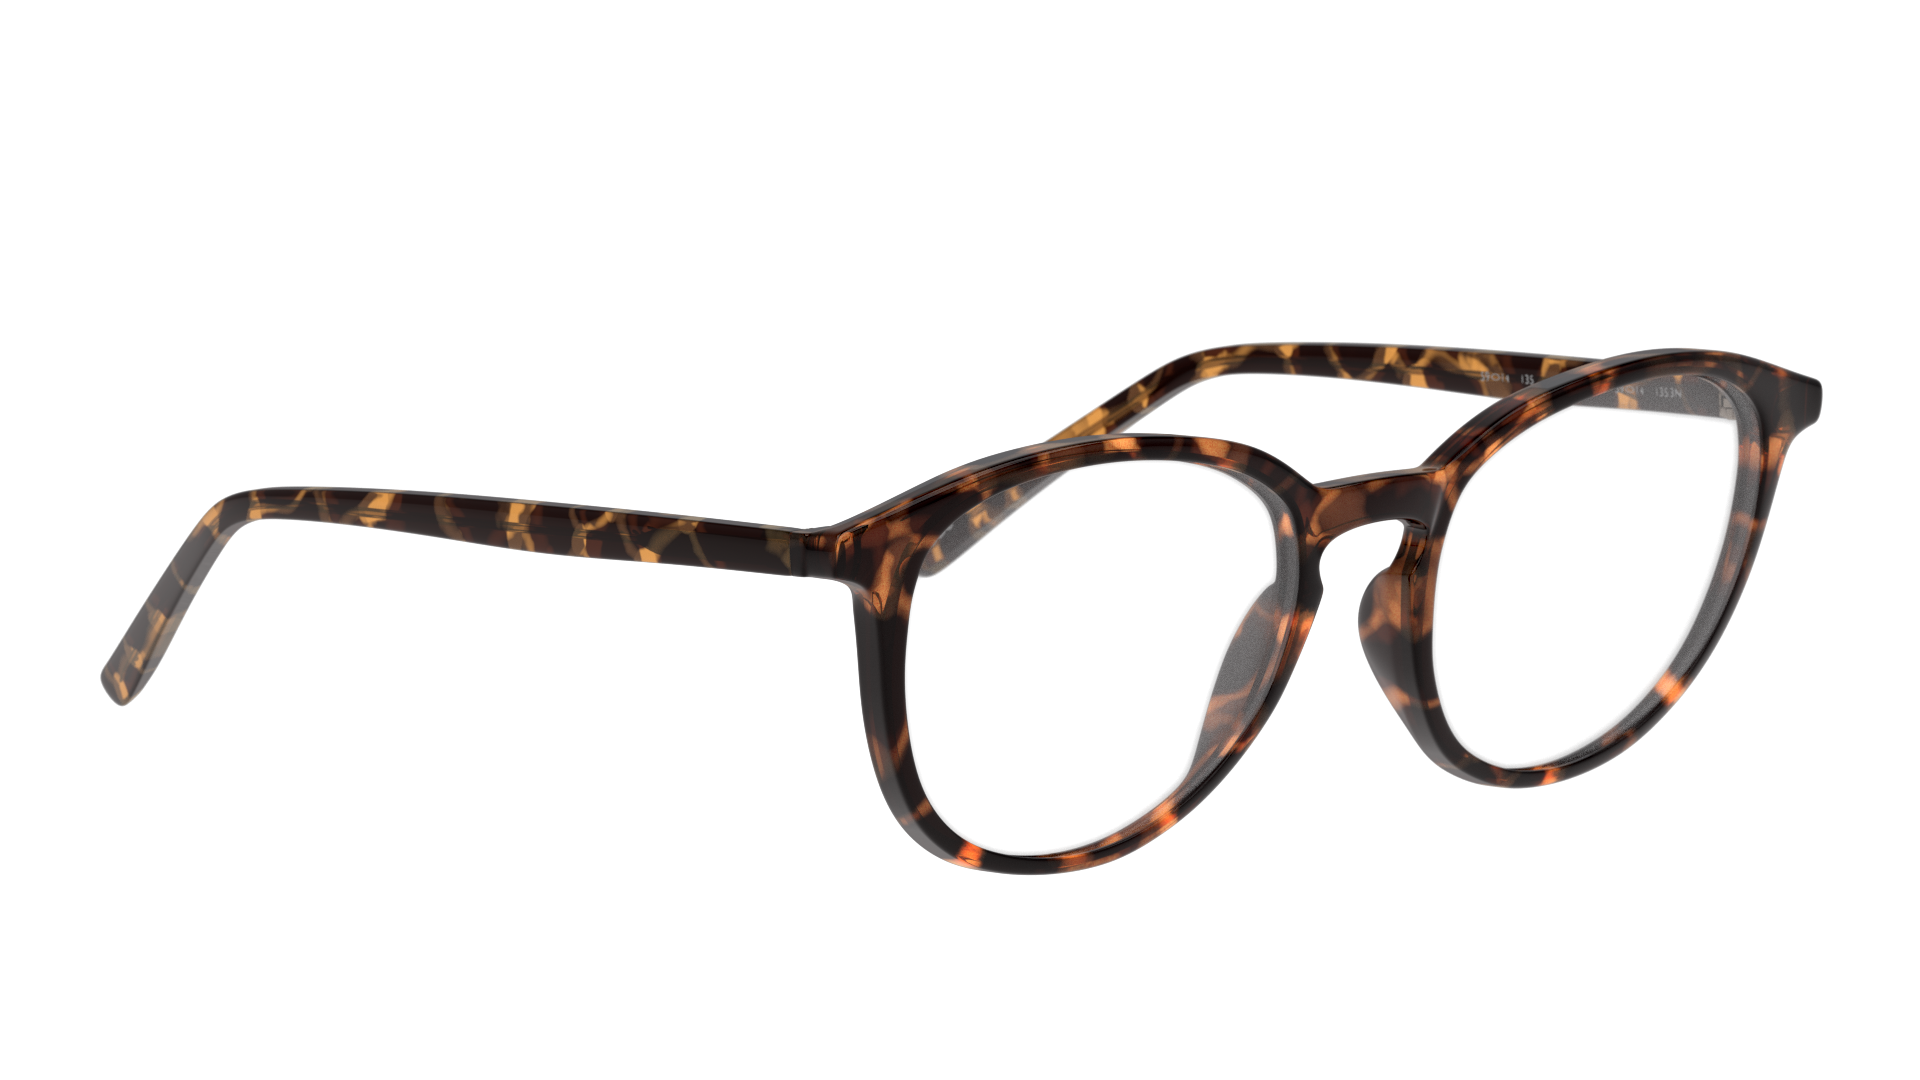 Angle_Right01 Seen SNOF5003 Glasses Transparent / Tortoise Shell